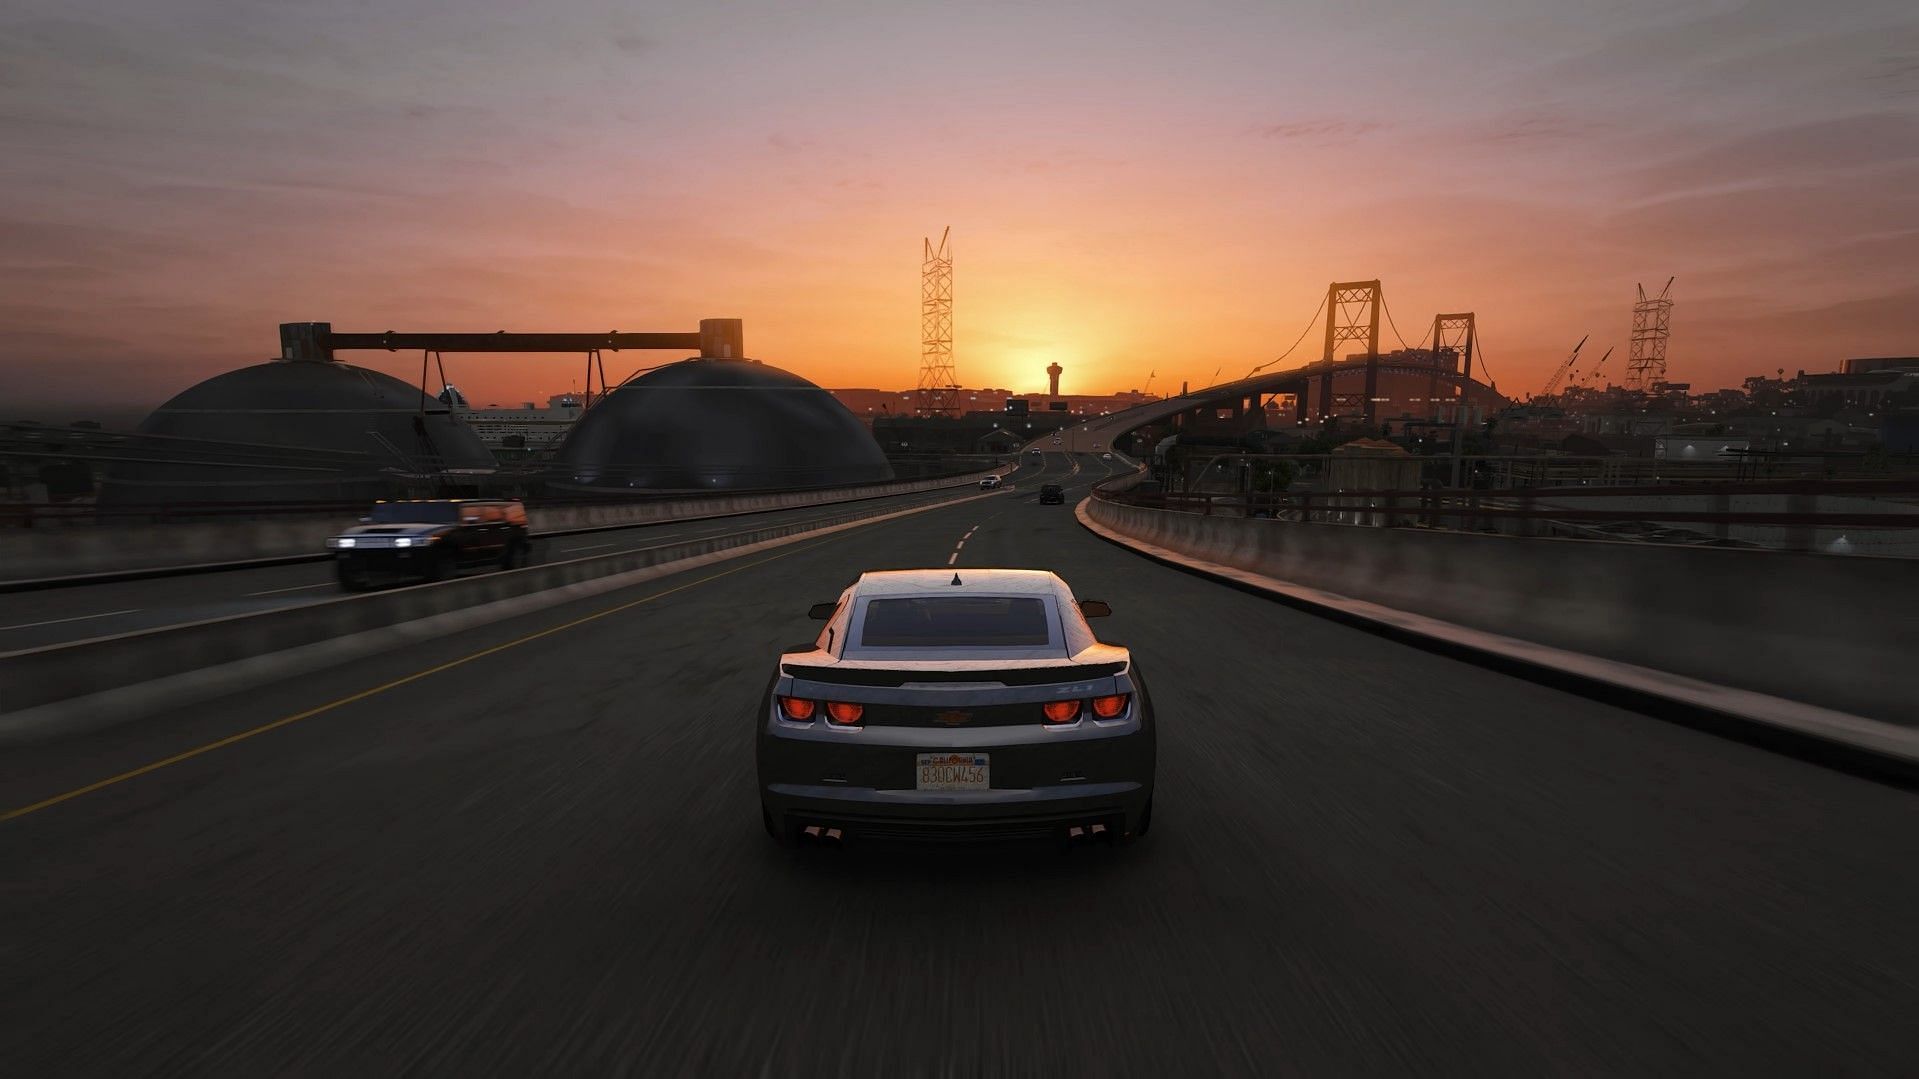 A screenshot featuring the sunset (Image via Digital Dreams)